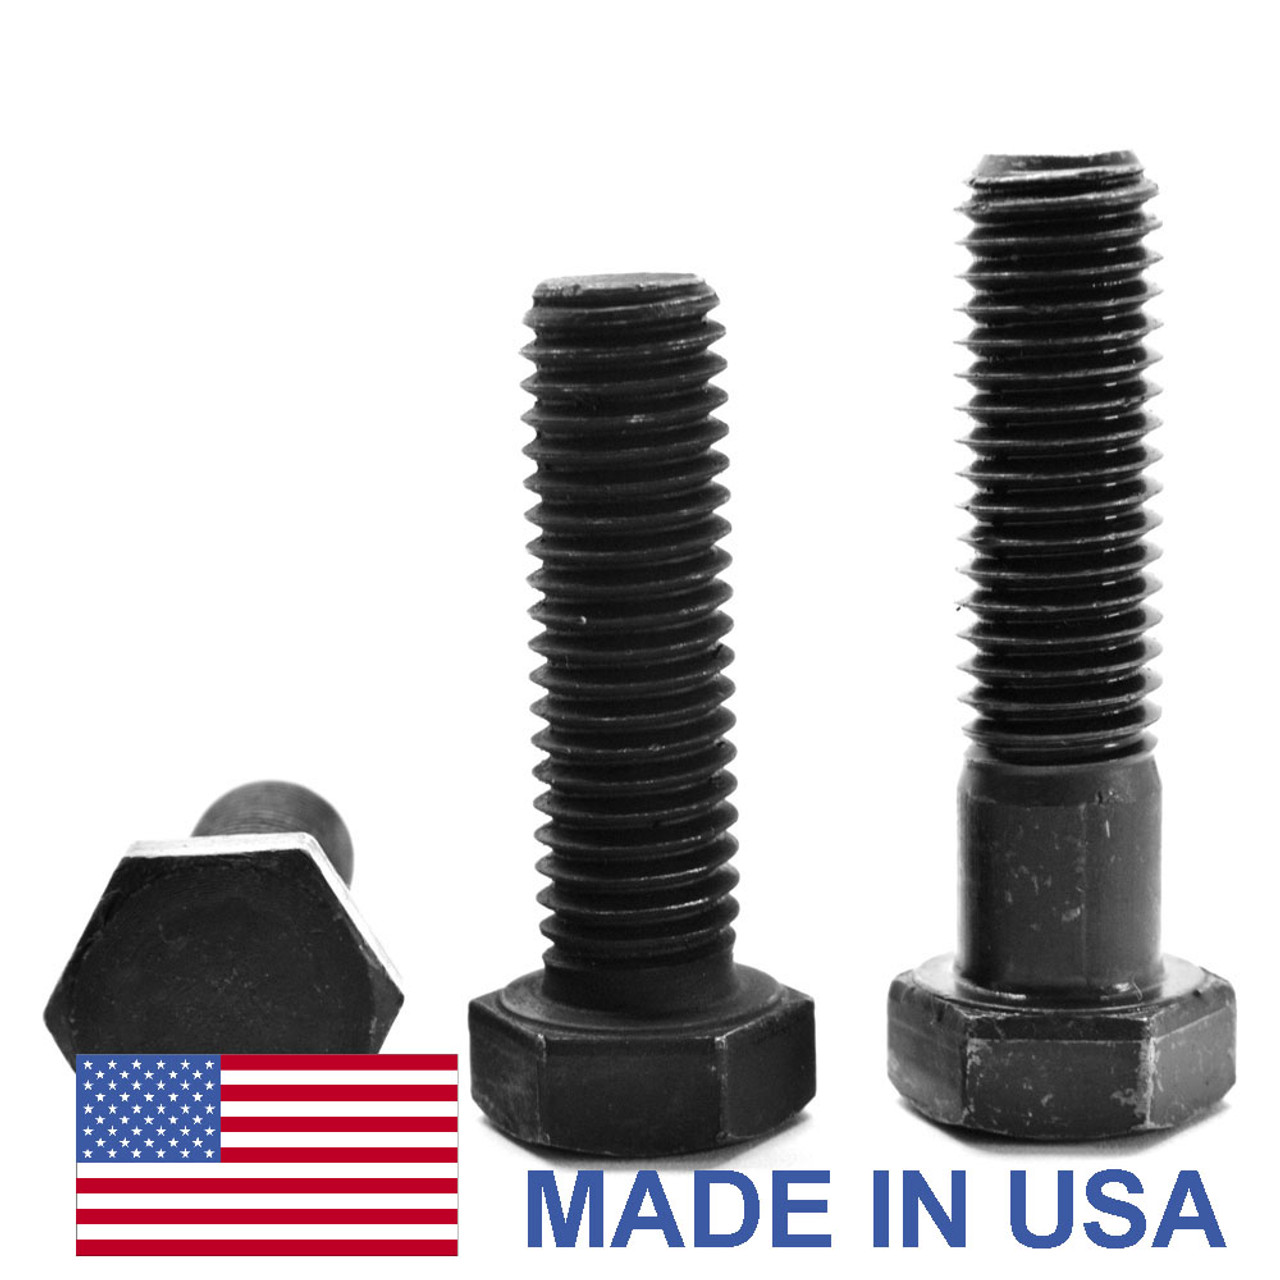 1"-8 x 4 1/2" (PT) Coarse Thread Grade 5 Hex Cap Screw (Bolt) - USA Medium Carbon Steel Black Oxide